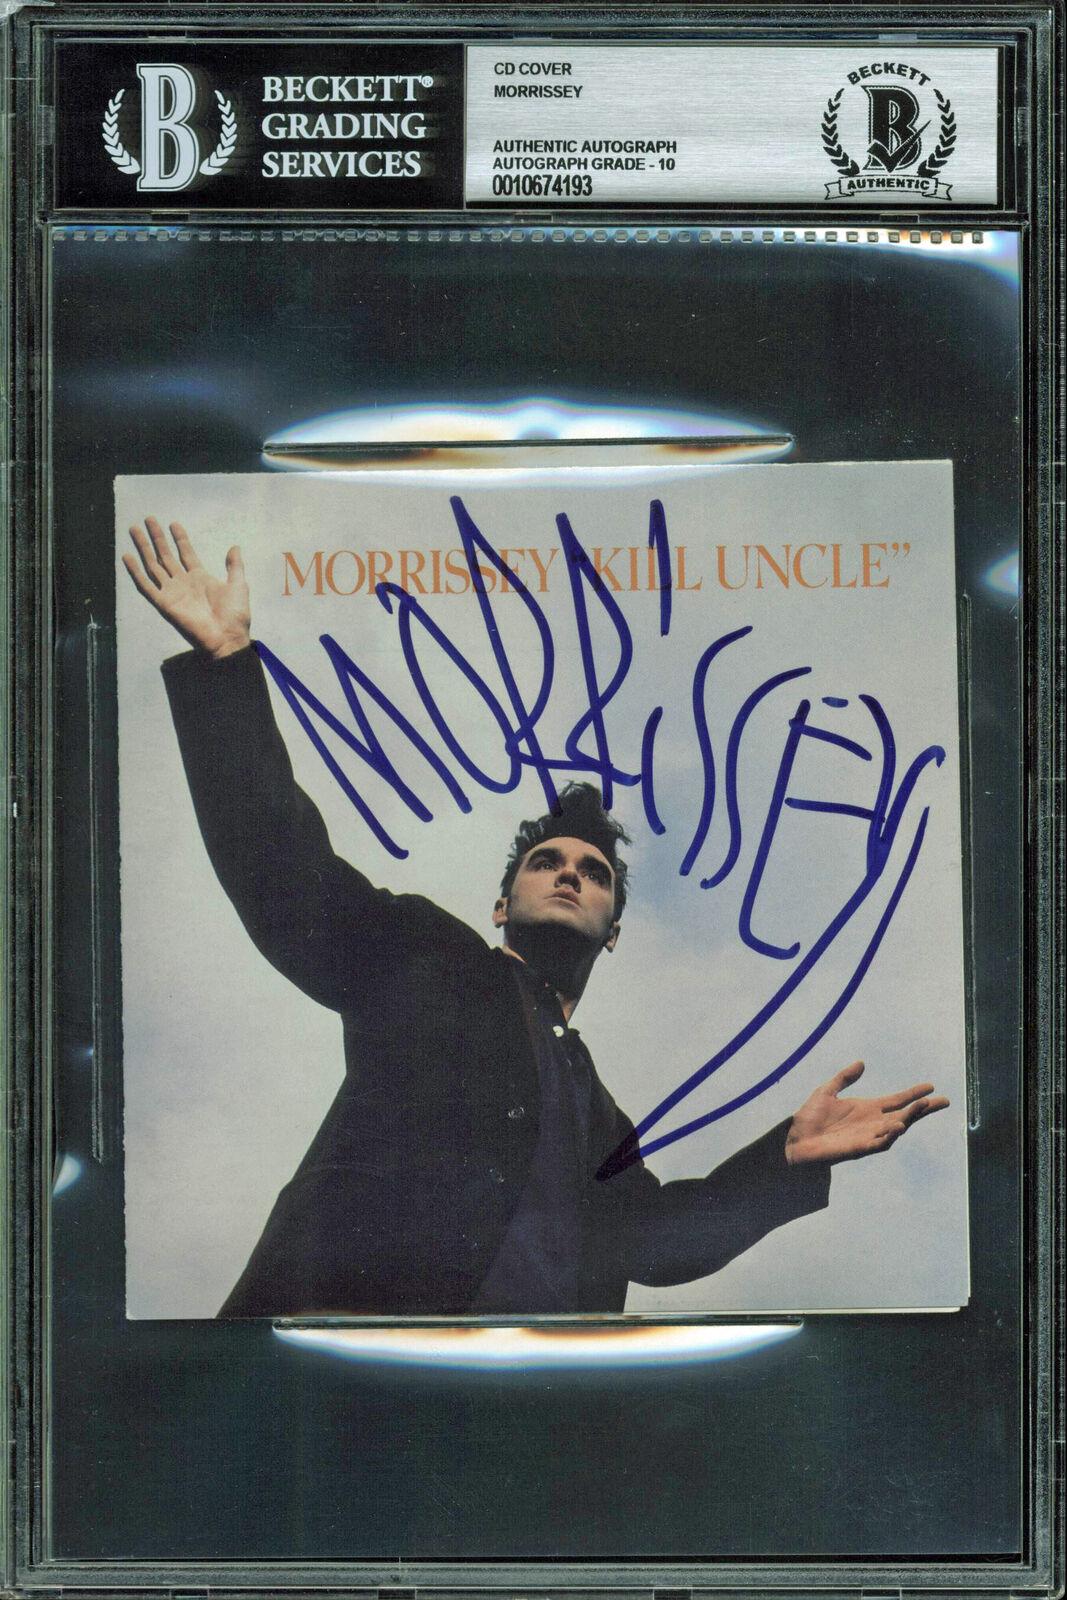 morrissey-signed-kill-uncle-cd-cover-auto-graded-gem-10-bas-slabbed8-t8816494-1600.jpg